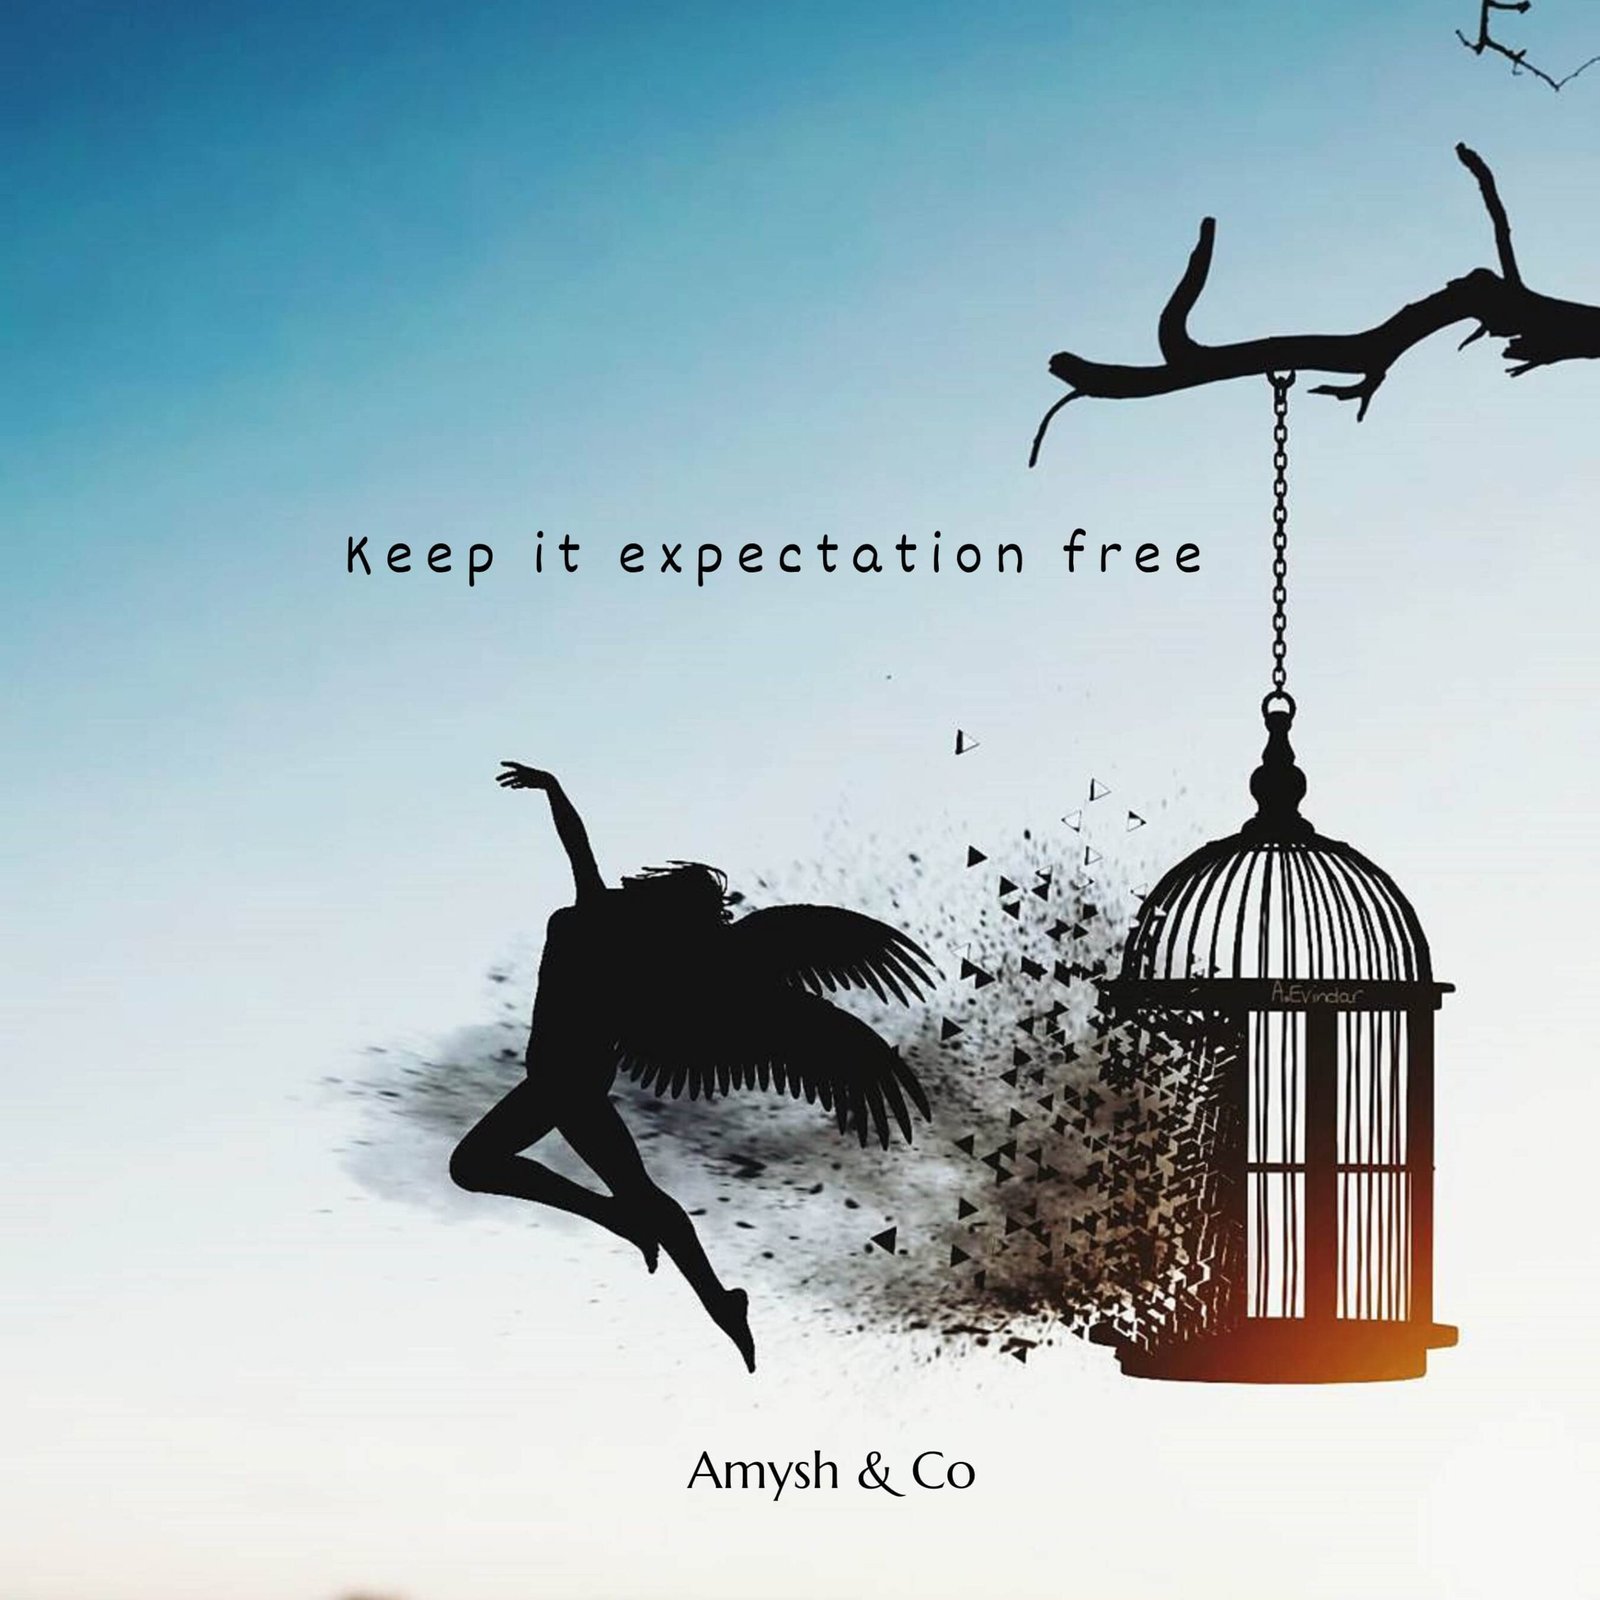 Keep it expectation free